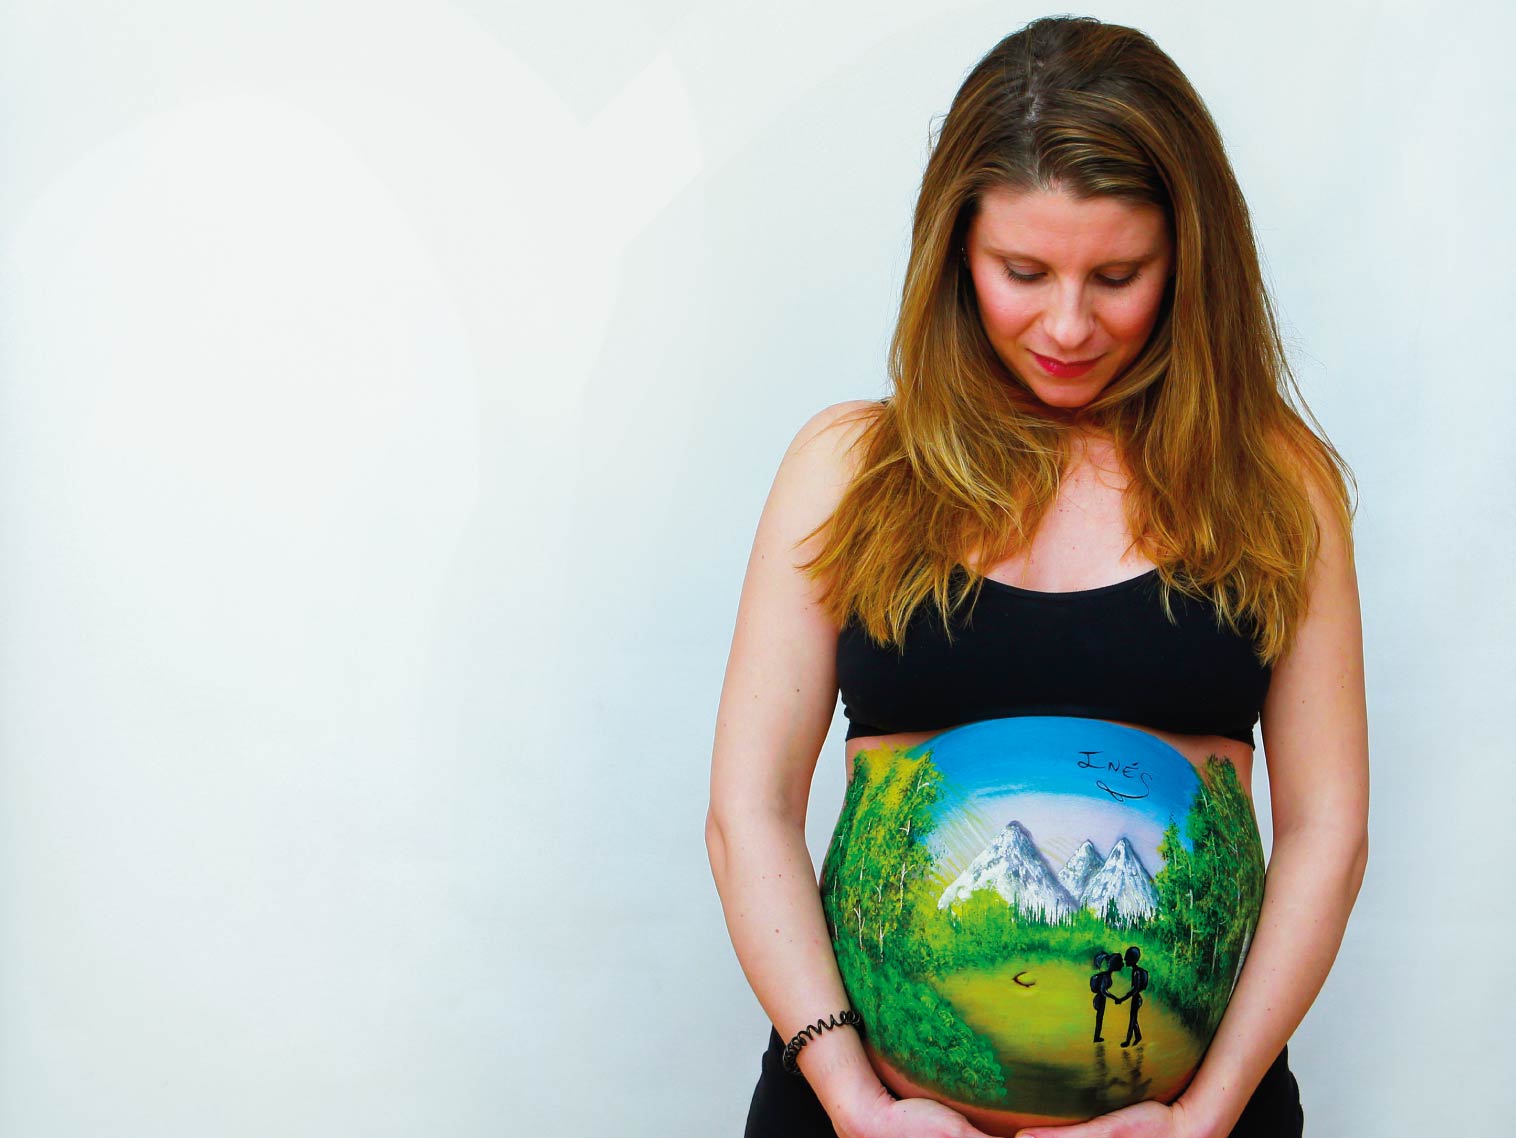 Pintatripitas - Bellypainting Tripitas embarazadas pintadas - Barrigas  pintadas